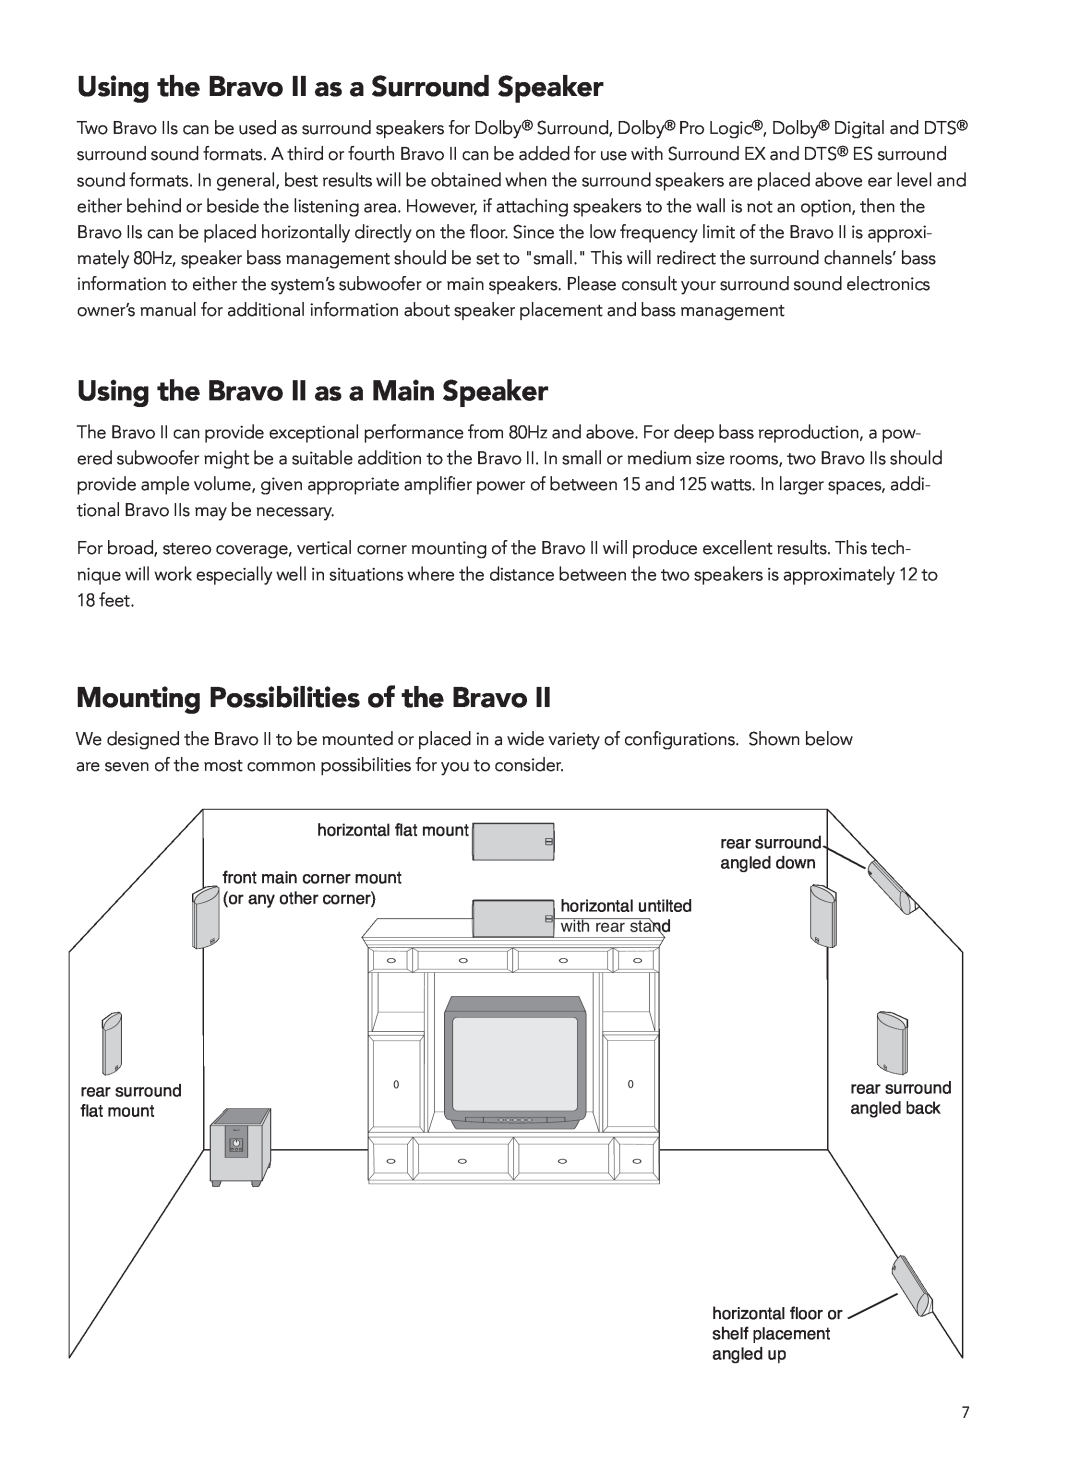 Boston Acoustics 2 manual Using the Bravo II as a Surround Speaker, Using the Bravo II as a Main Speaker 